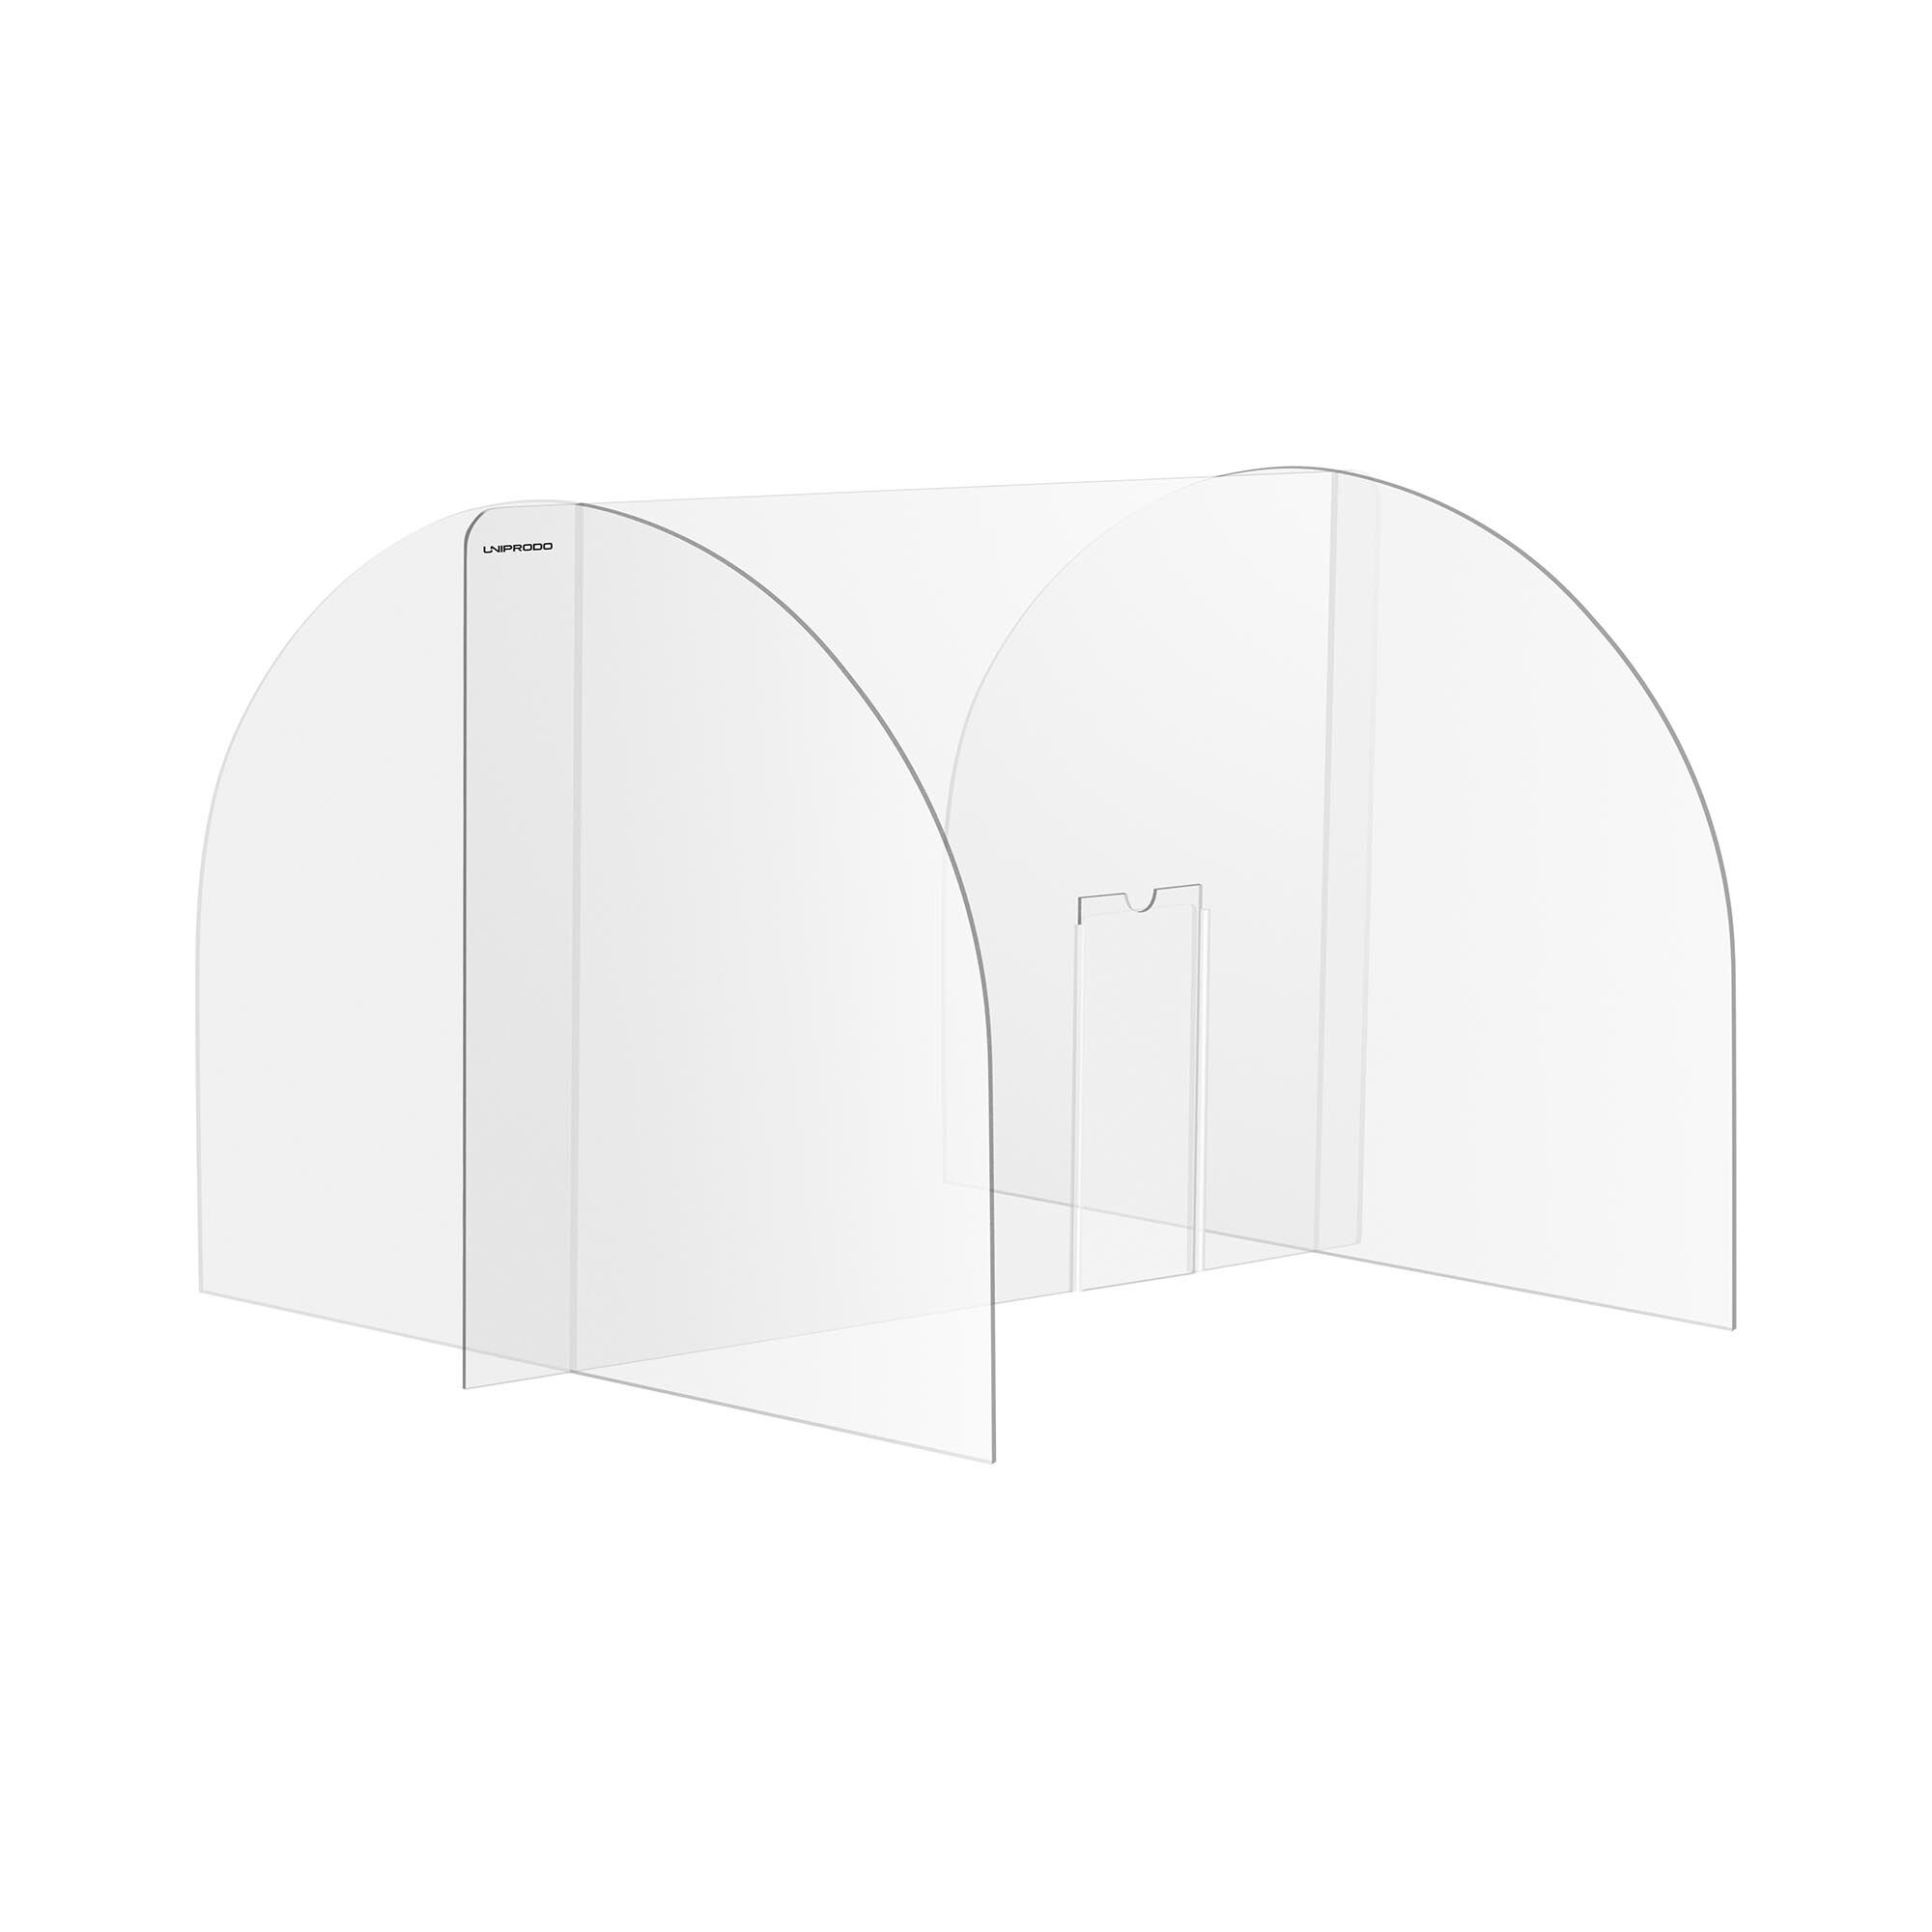 Uniprodo Ochranná přepážka - 82 x 60 cm - akrylátové sklo - výdejové okénko 25 x 12 cm UNI-PPG04